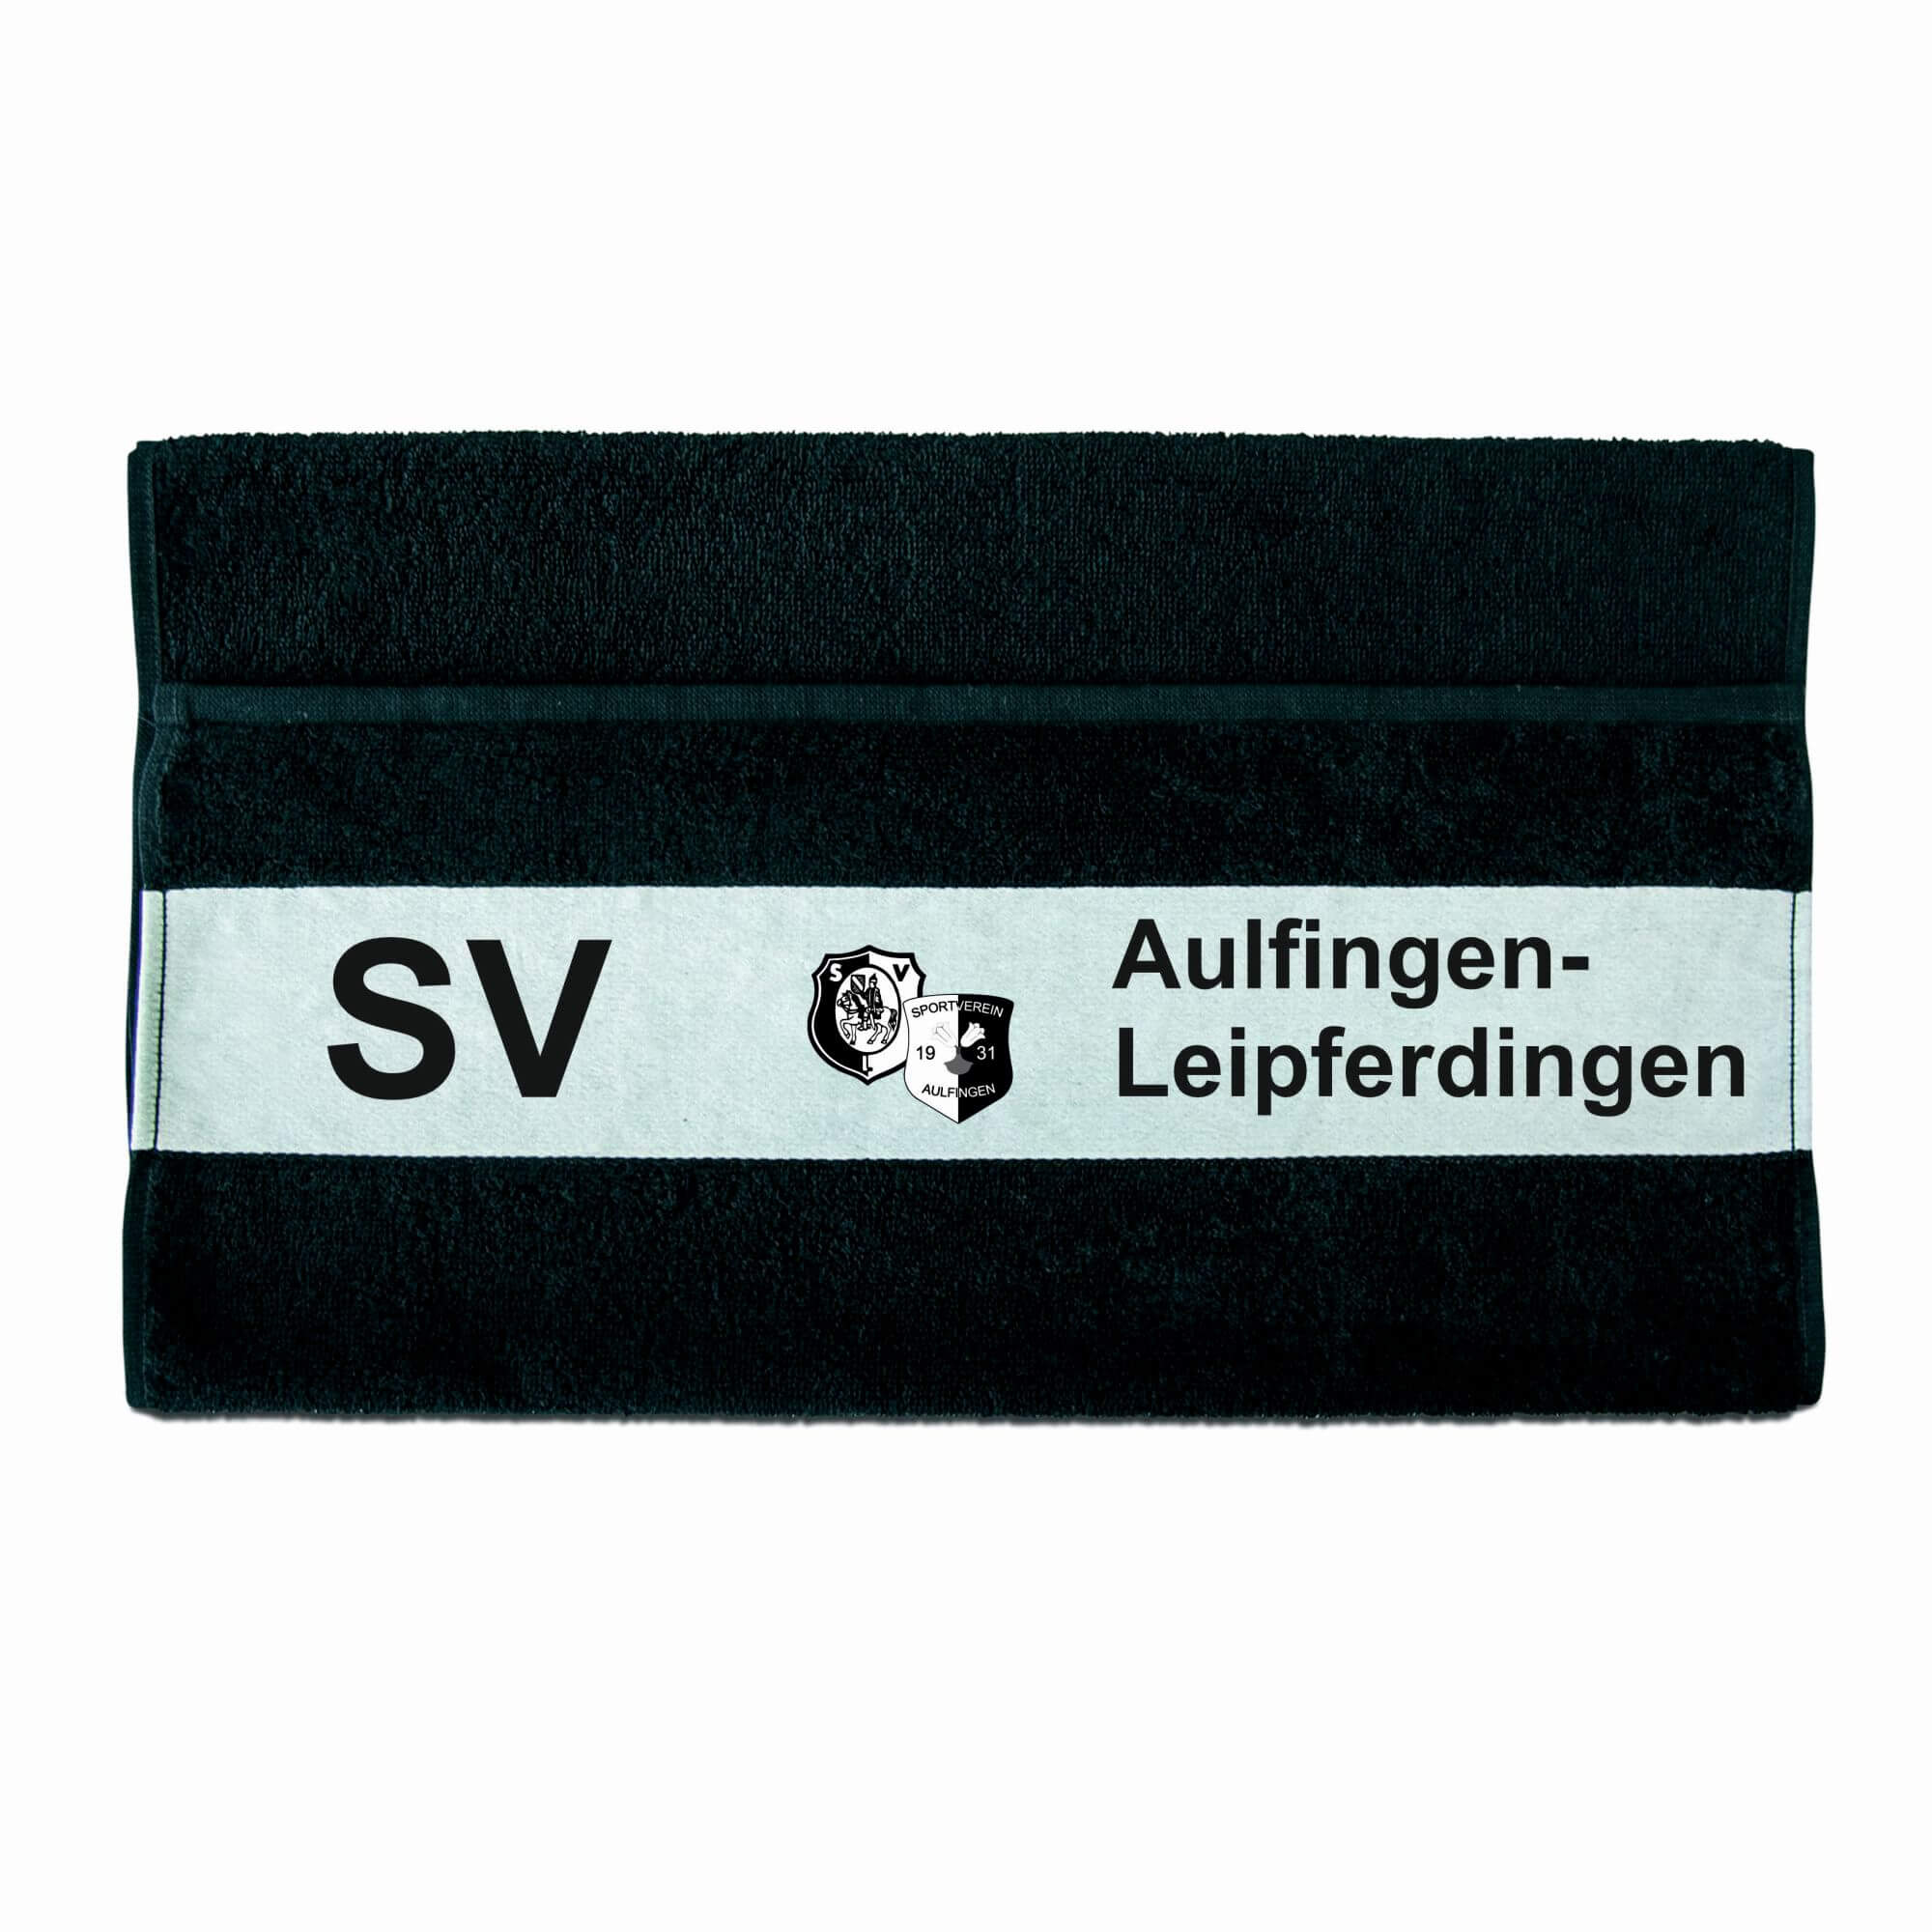 Walkfrottier-Handtuch SV Aulfingen-Leipferdingen schwarz 67x140cm